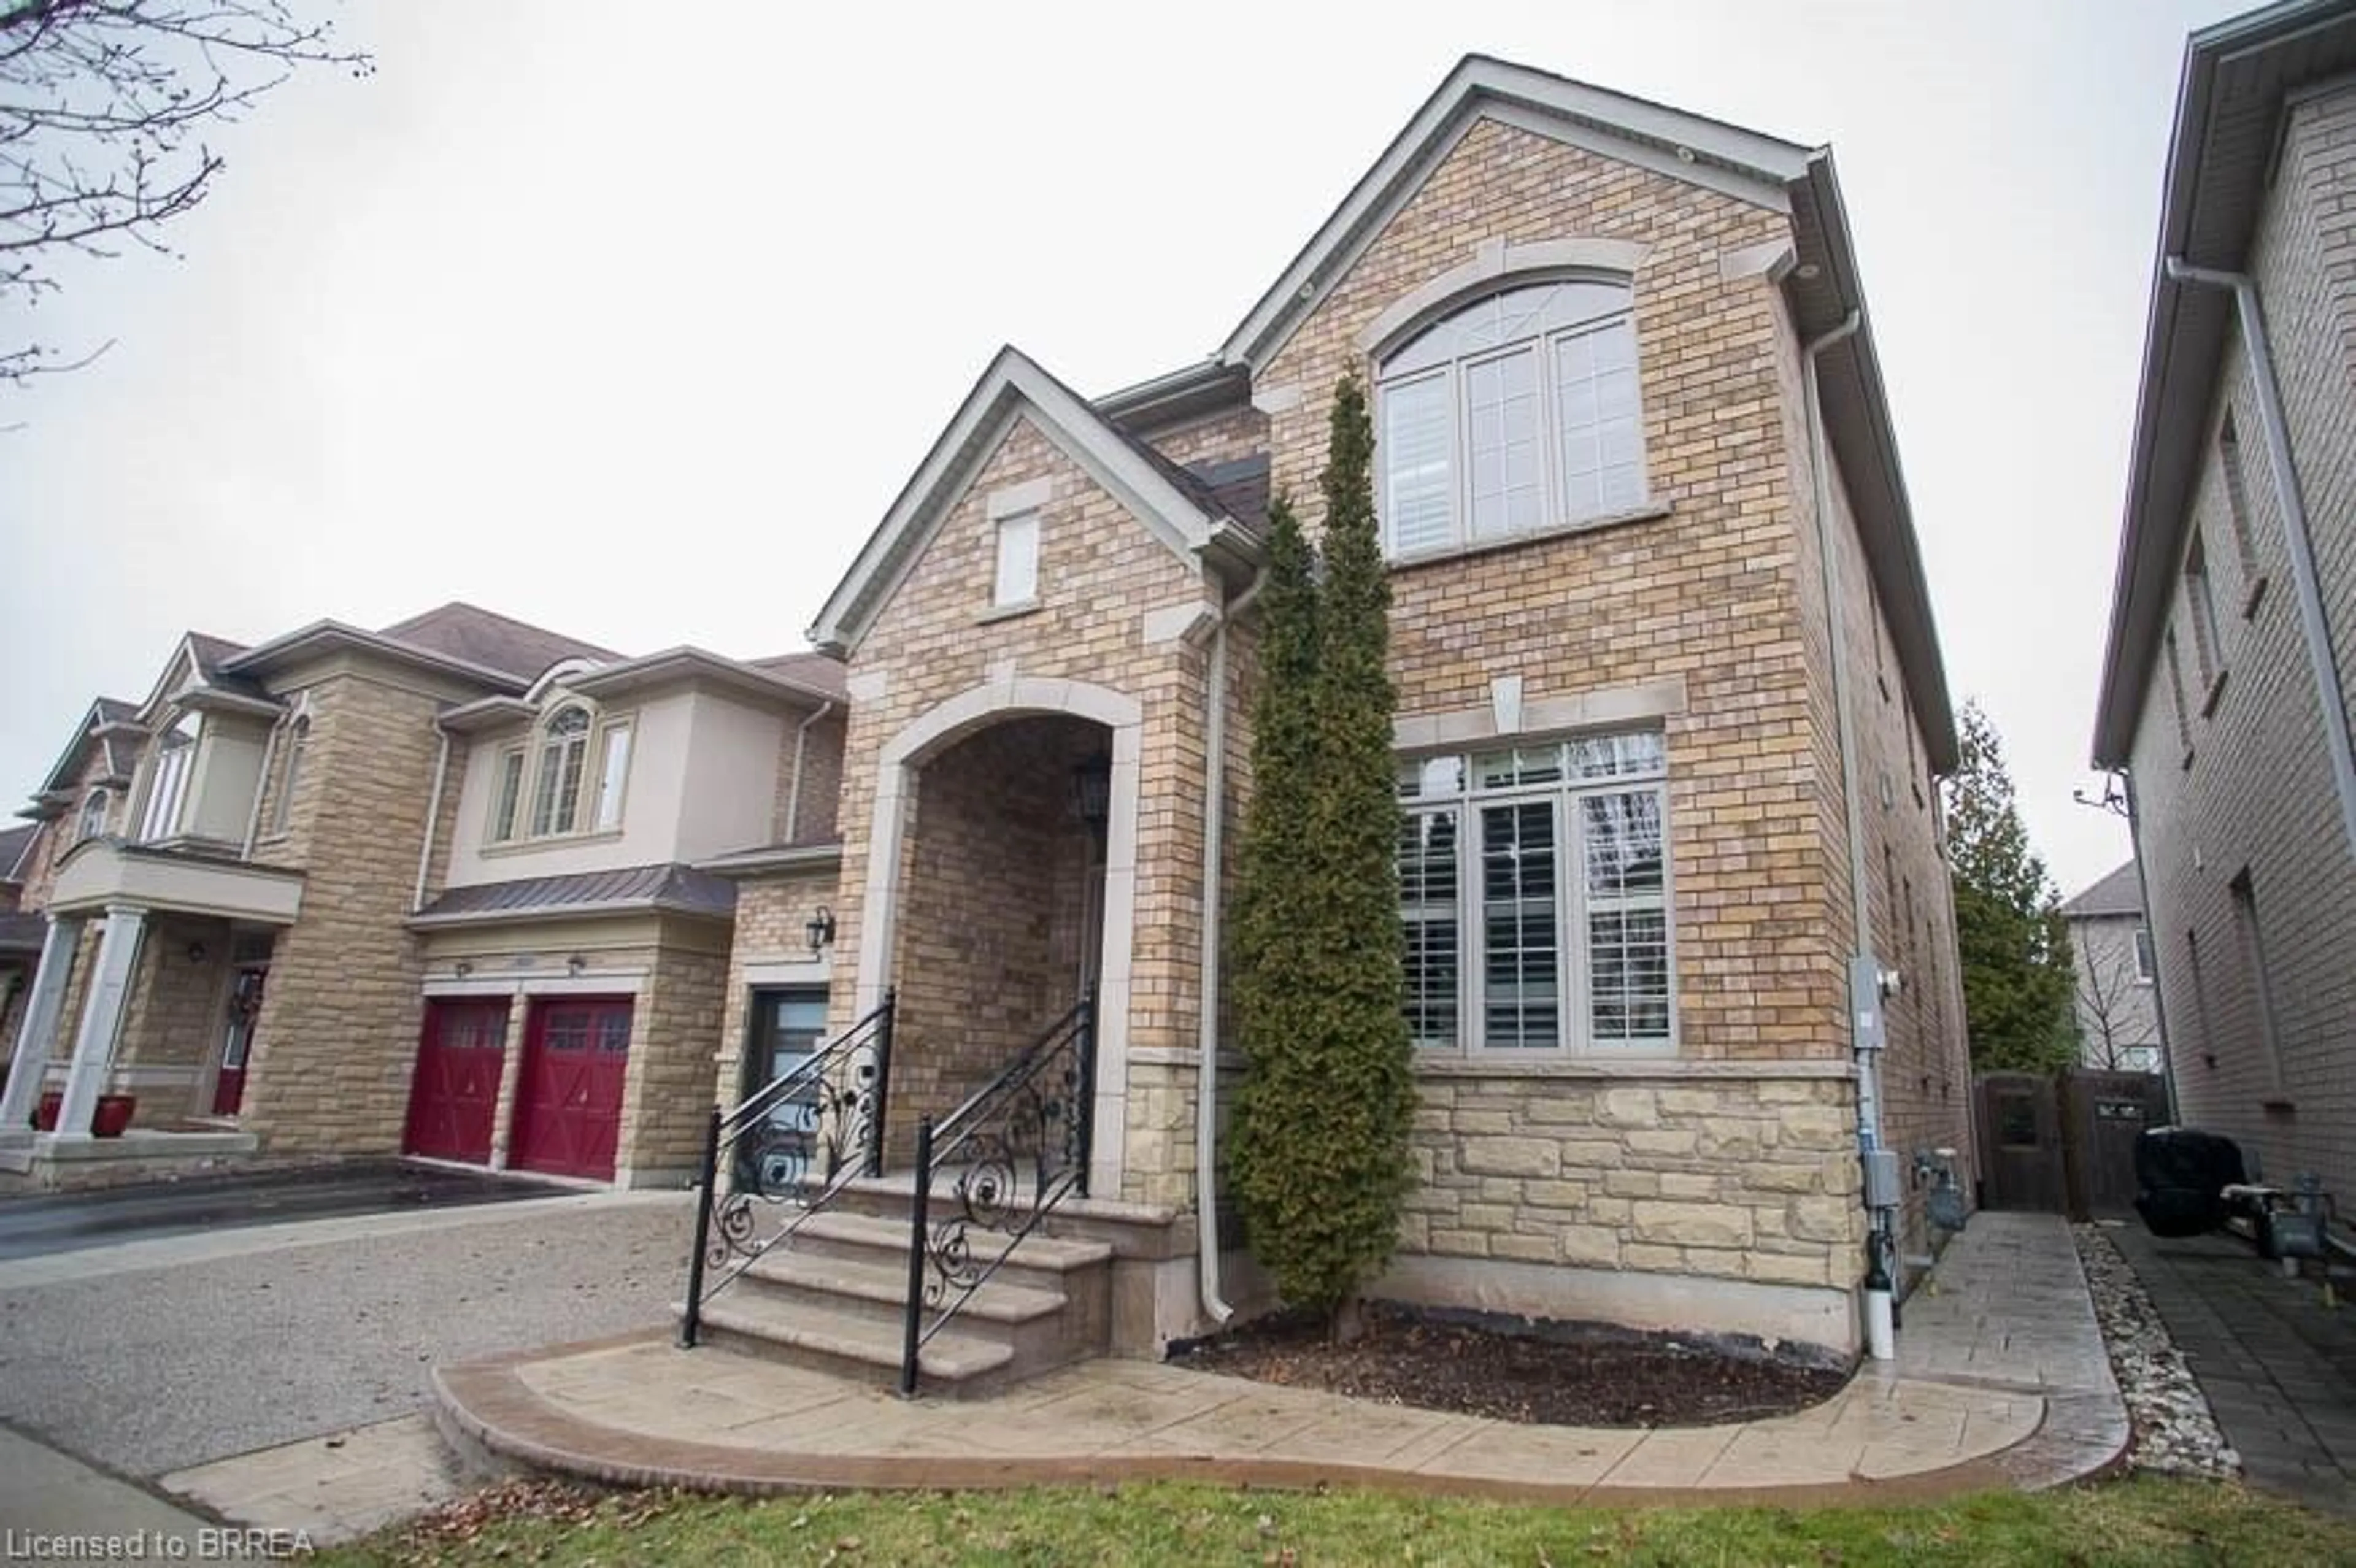 Home with brick exterior material for 4671 Mcleod Rd, Burlington Ontario L7M 0E4